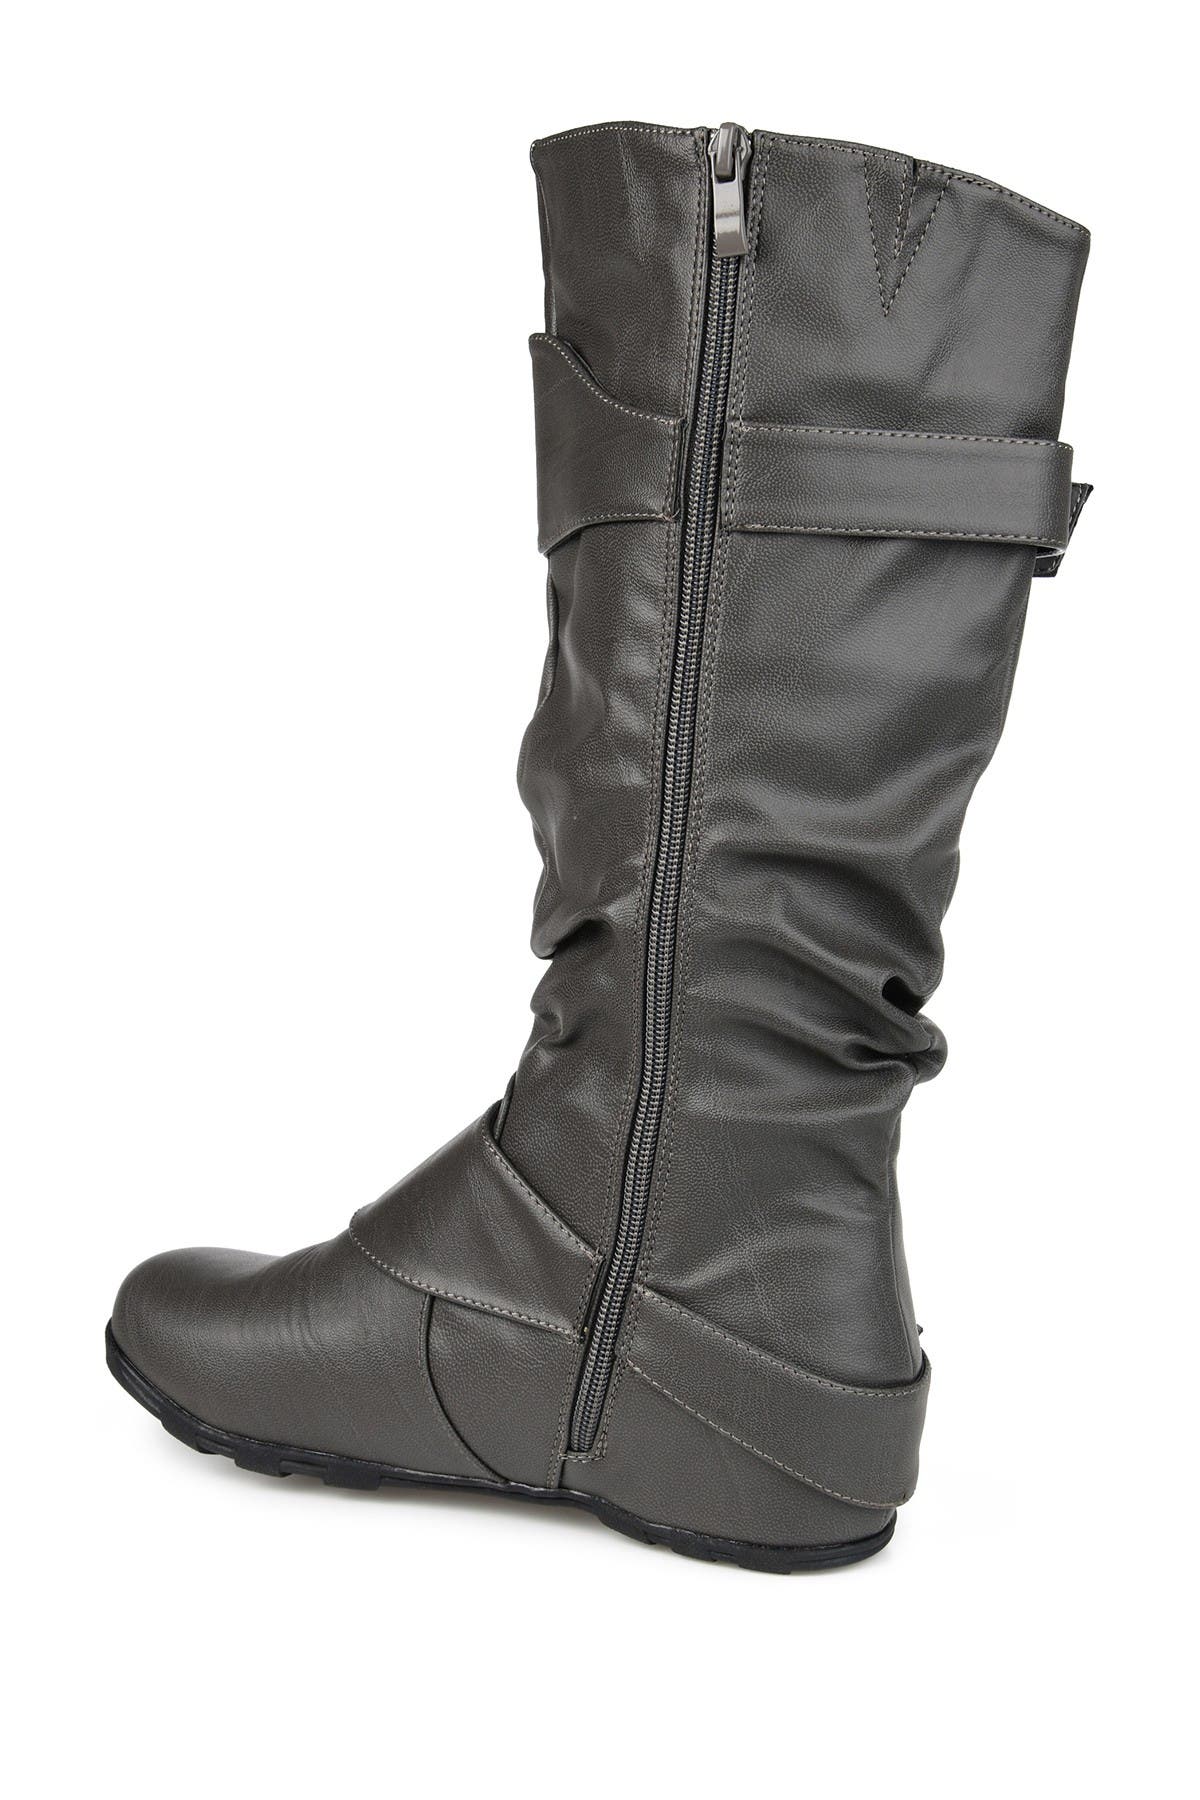 gray wide calf boot